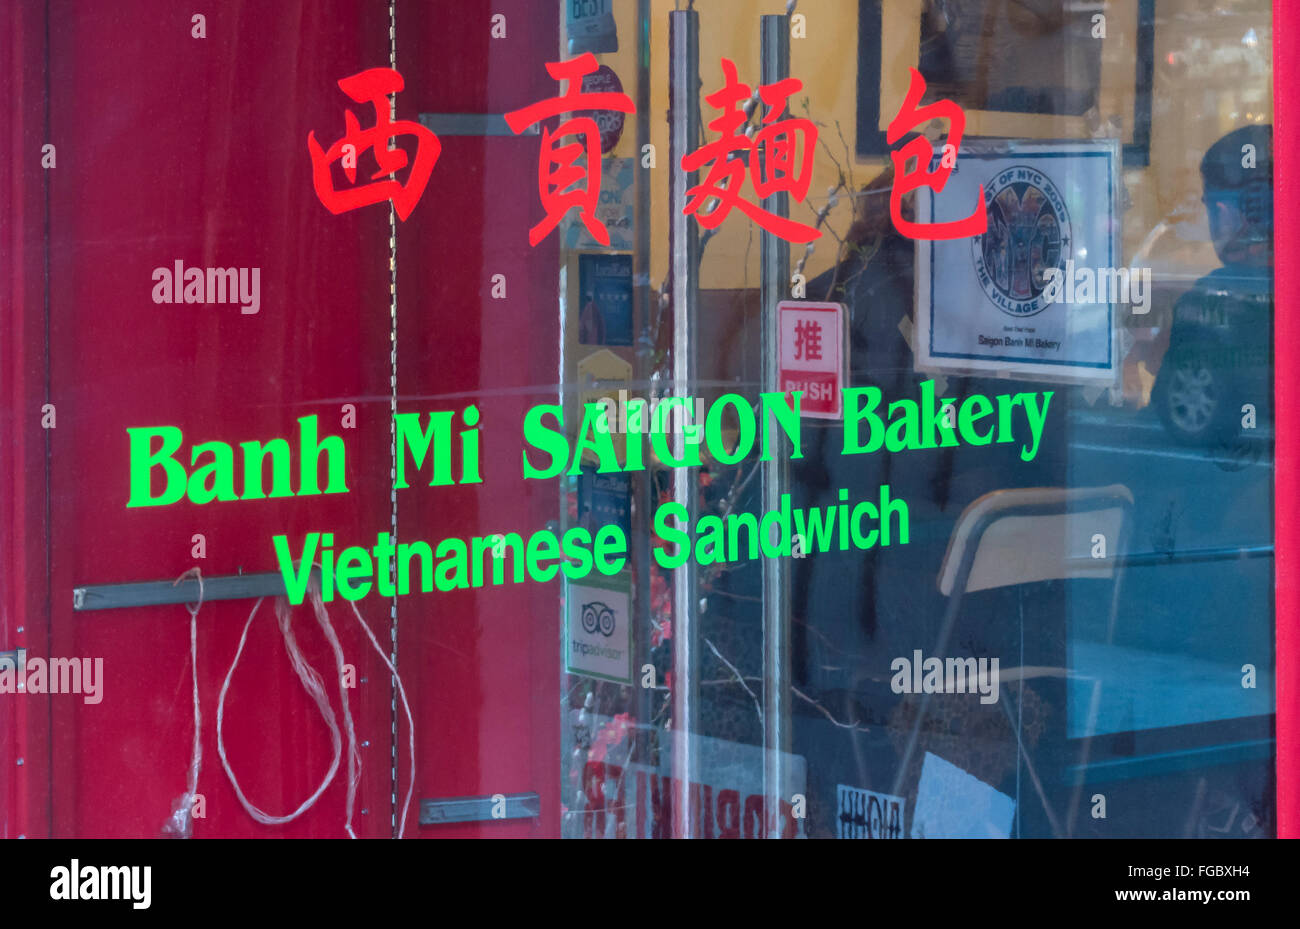 Banh Mi Saigon Bakery Sandwich Vietnamien Little Italy New York City Banque D'Images